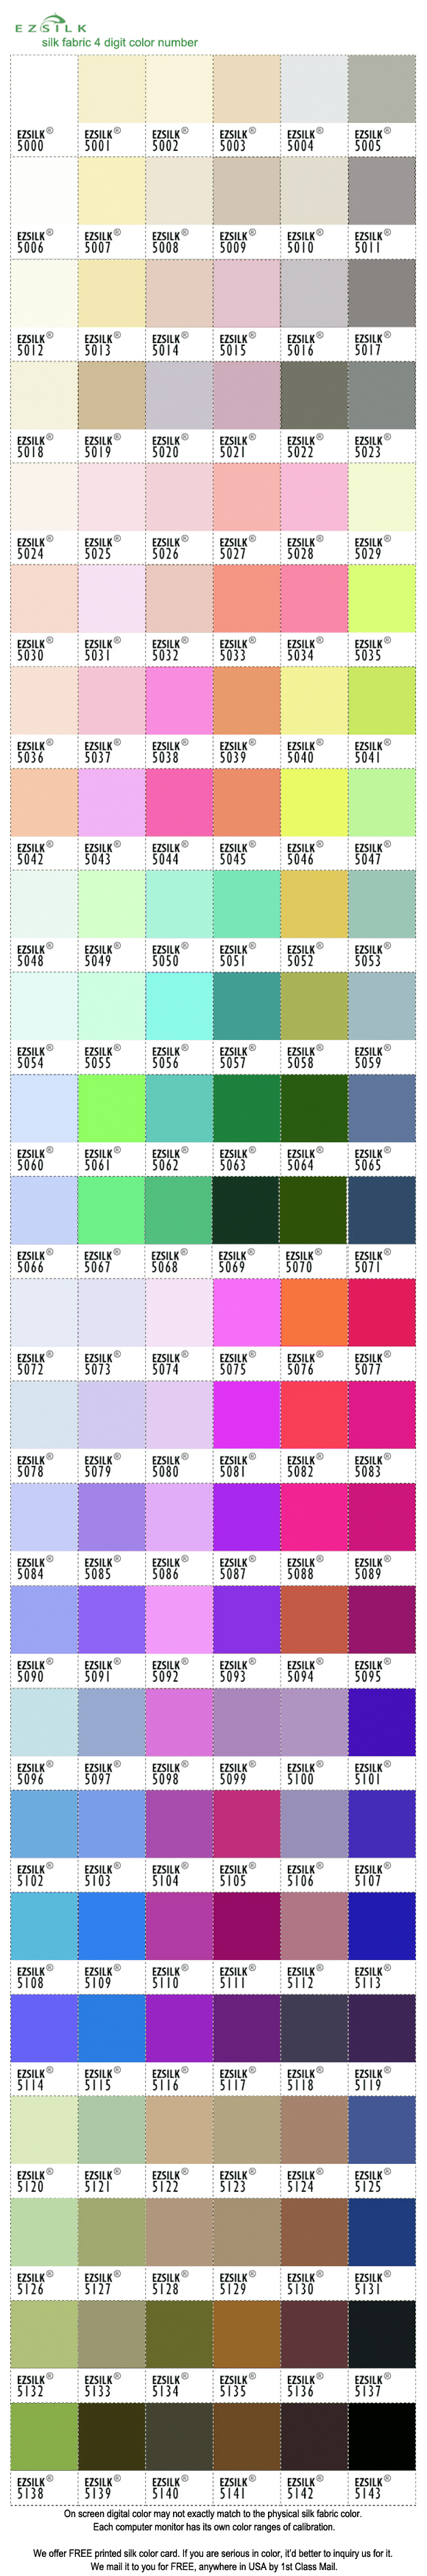 Silk Span Charmeuse Fabric - 12,000 Colors Available, Grade A+ Silk Quality